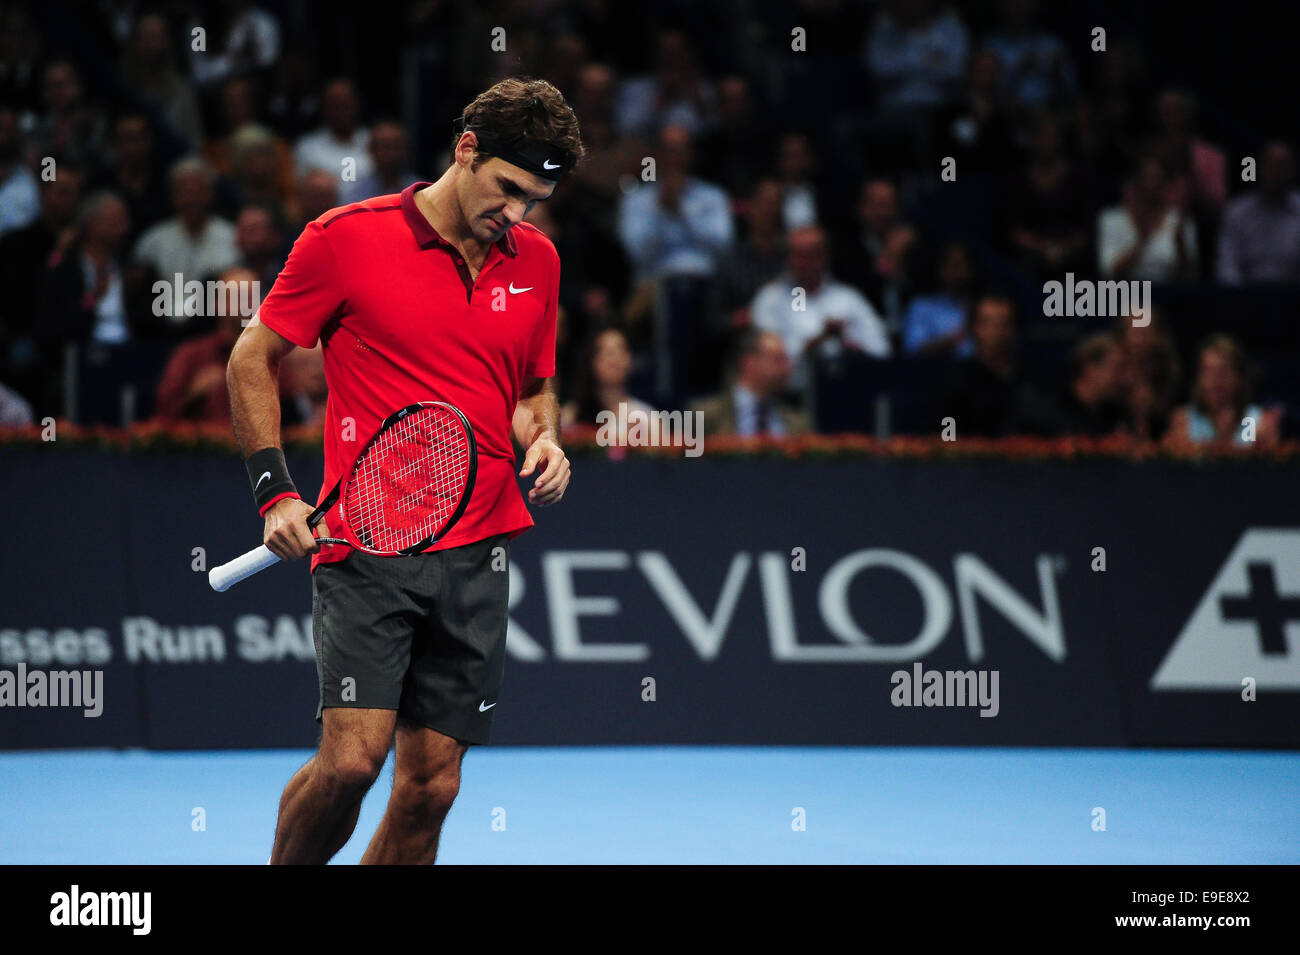 Basel, Svizzera. 26 ottobre, 2014. Roger Federer durante la finale di Swiss interni a St. Jakobshalle. Foto: Miroslav Dakov/ Alamy Live News Foto Stock